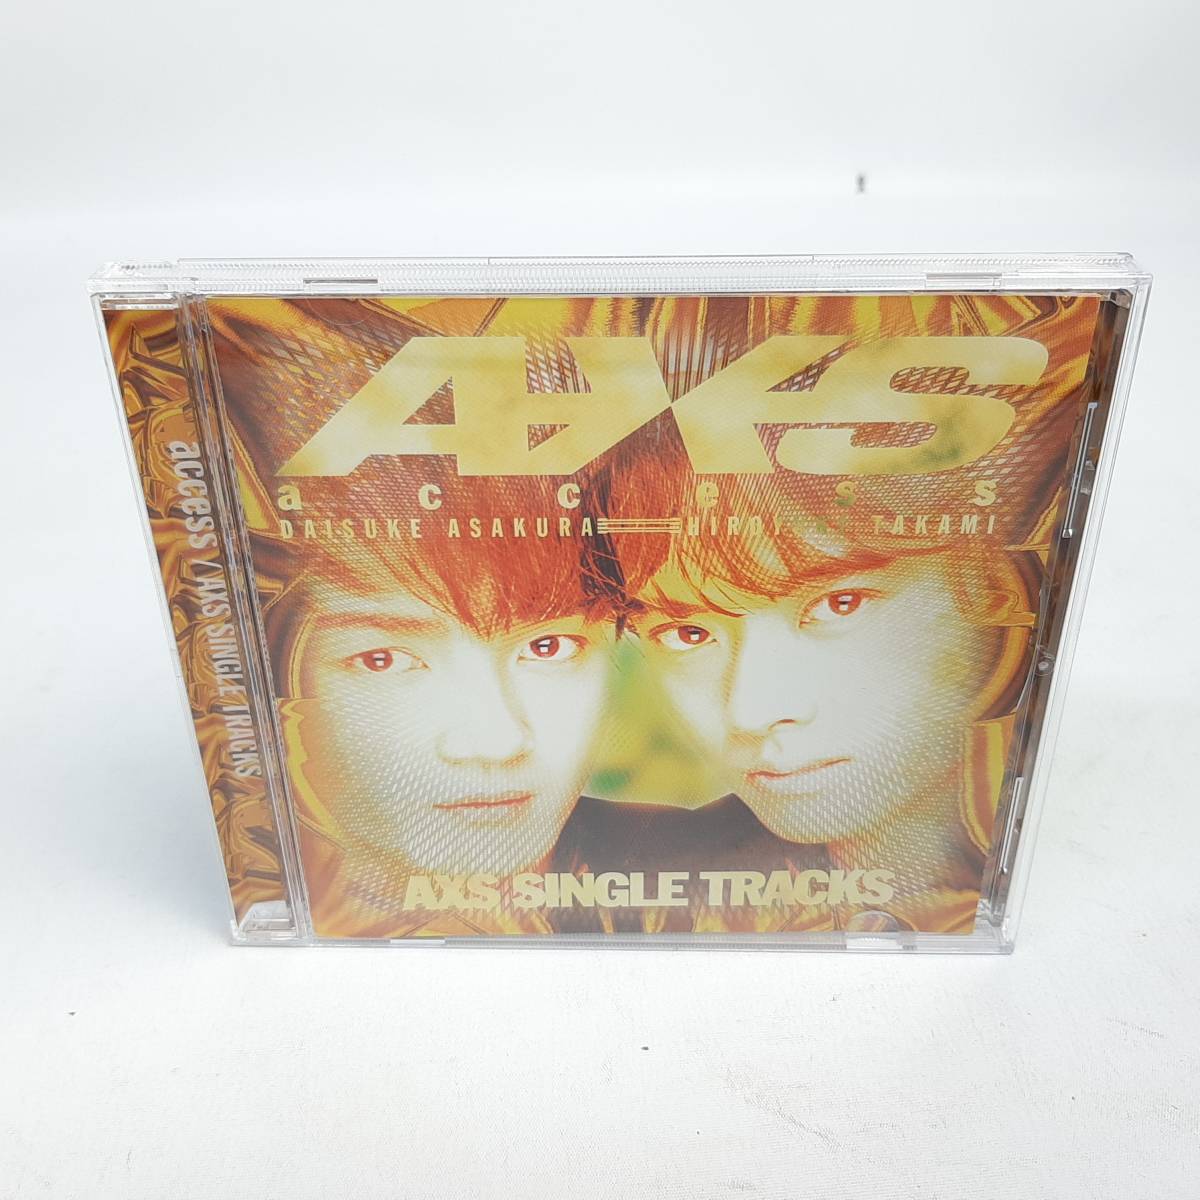 ACCESS(アクセス) 『AXS SINGLE TRACKS』/ ベストアルバムCD、浅倉大介、貴水博之_画像1